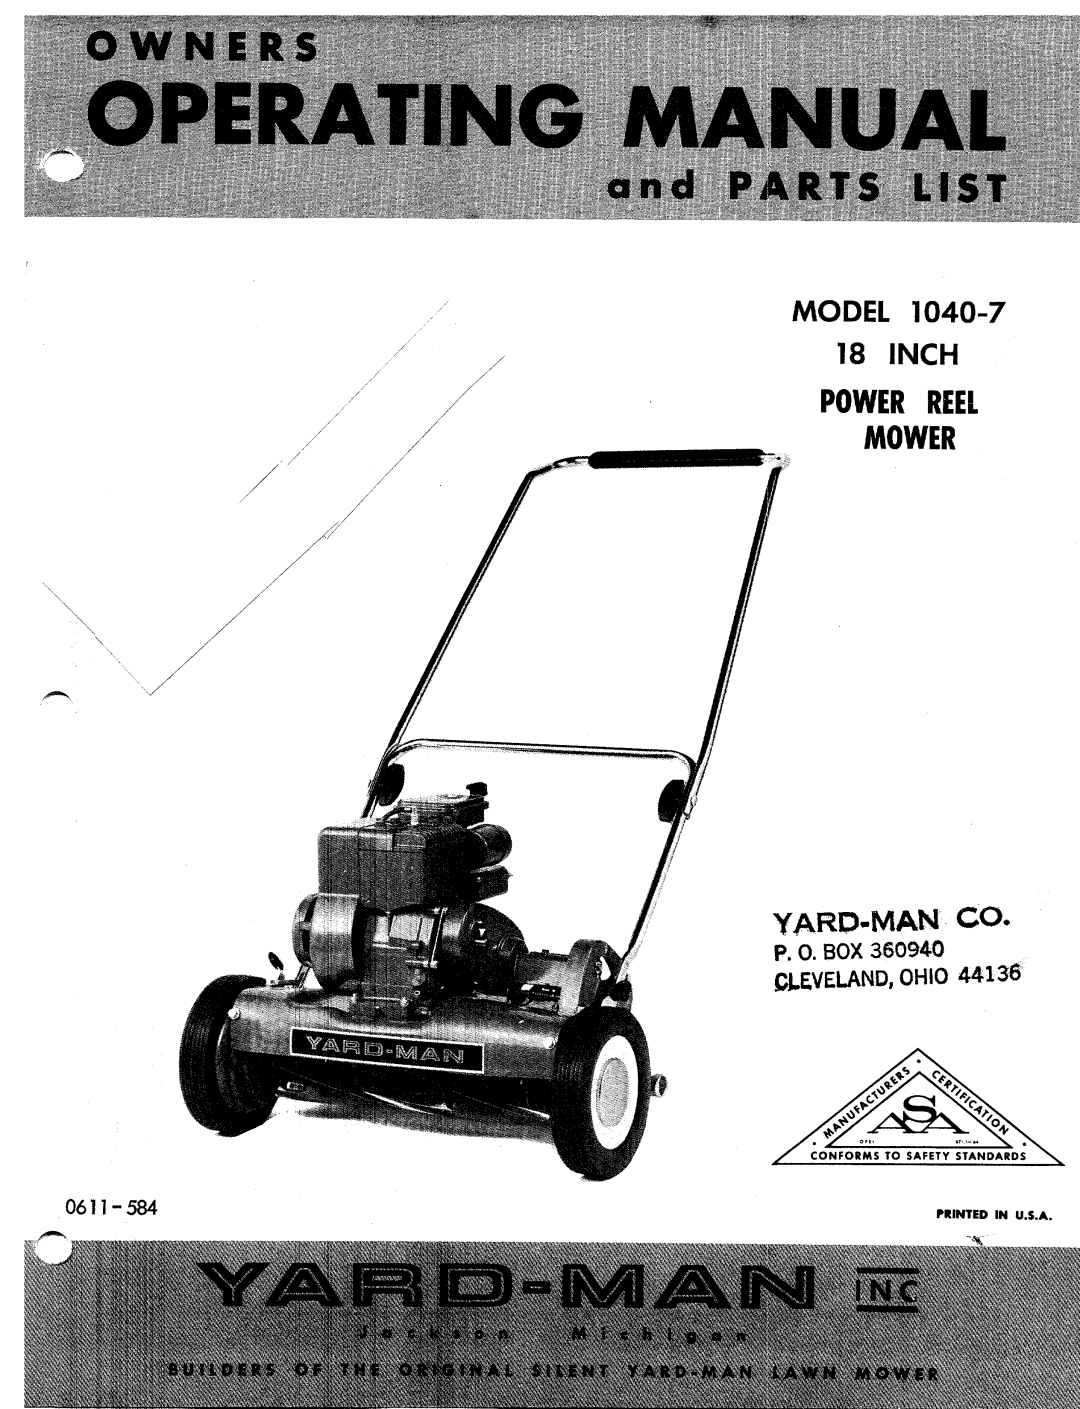 Yard-Man 1040-7 manual 